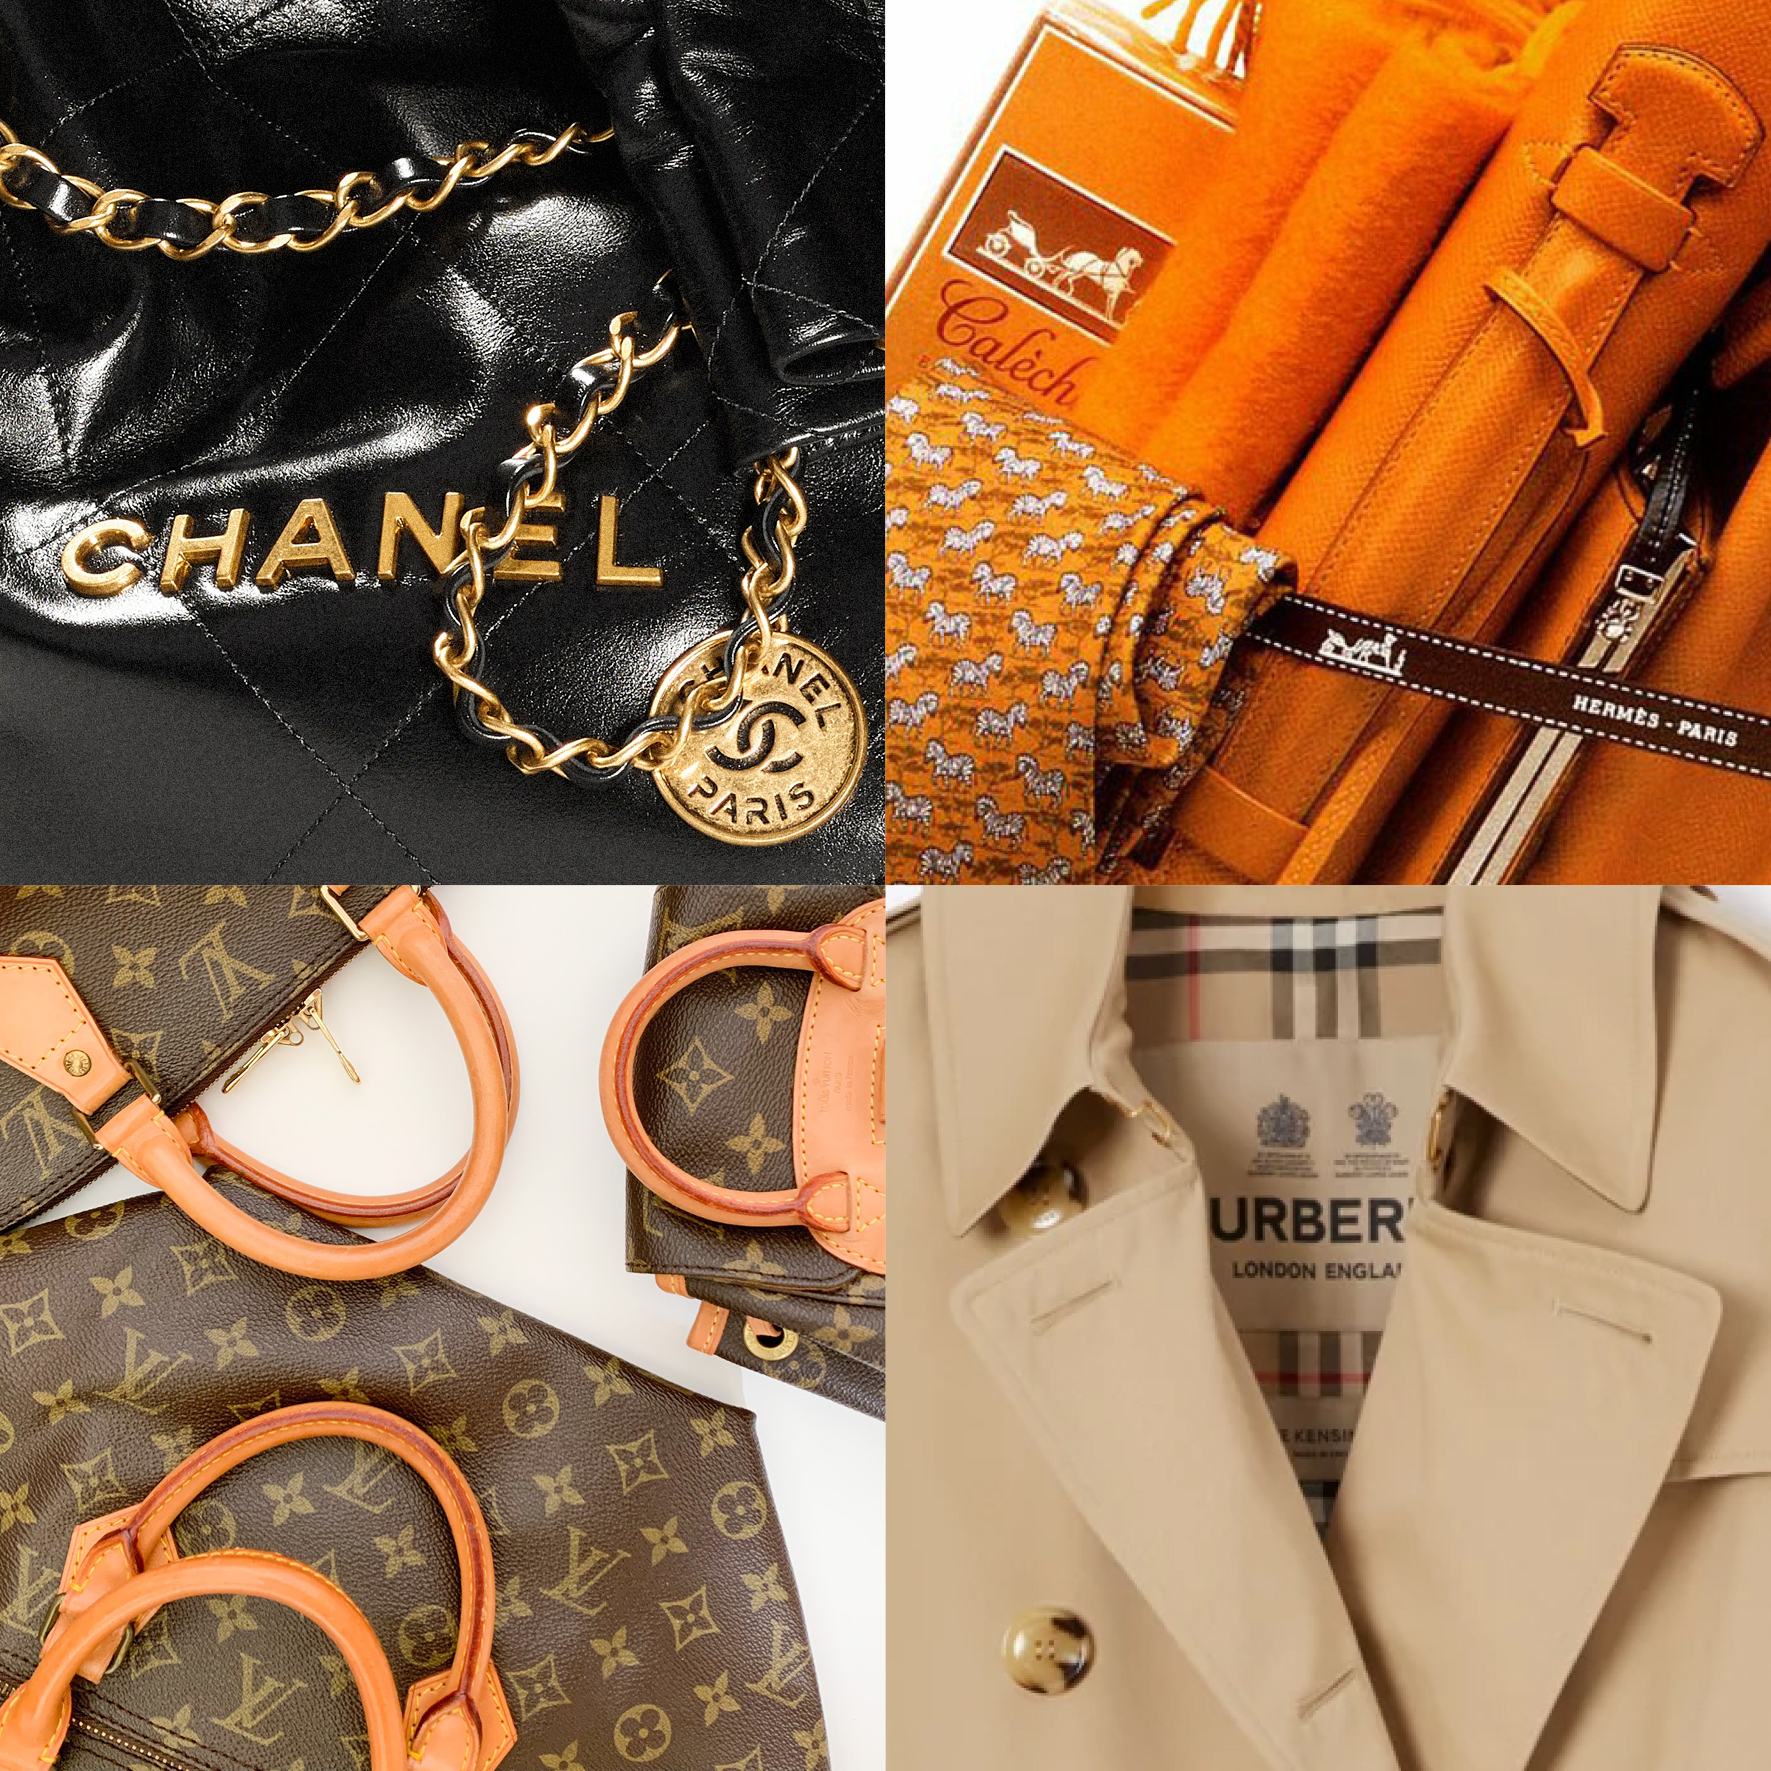 Louis Vuitton, Chanel Rise as Prada Falls in Luxury Brand Survey